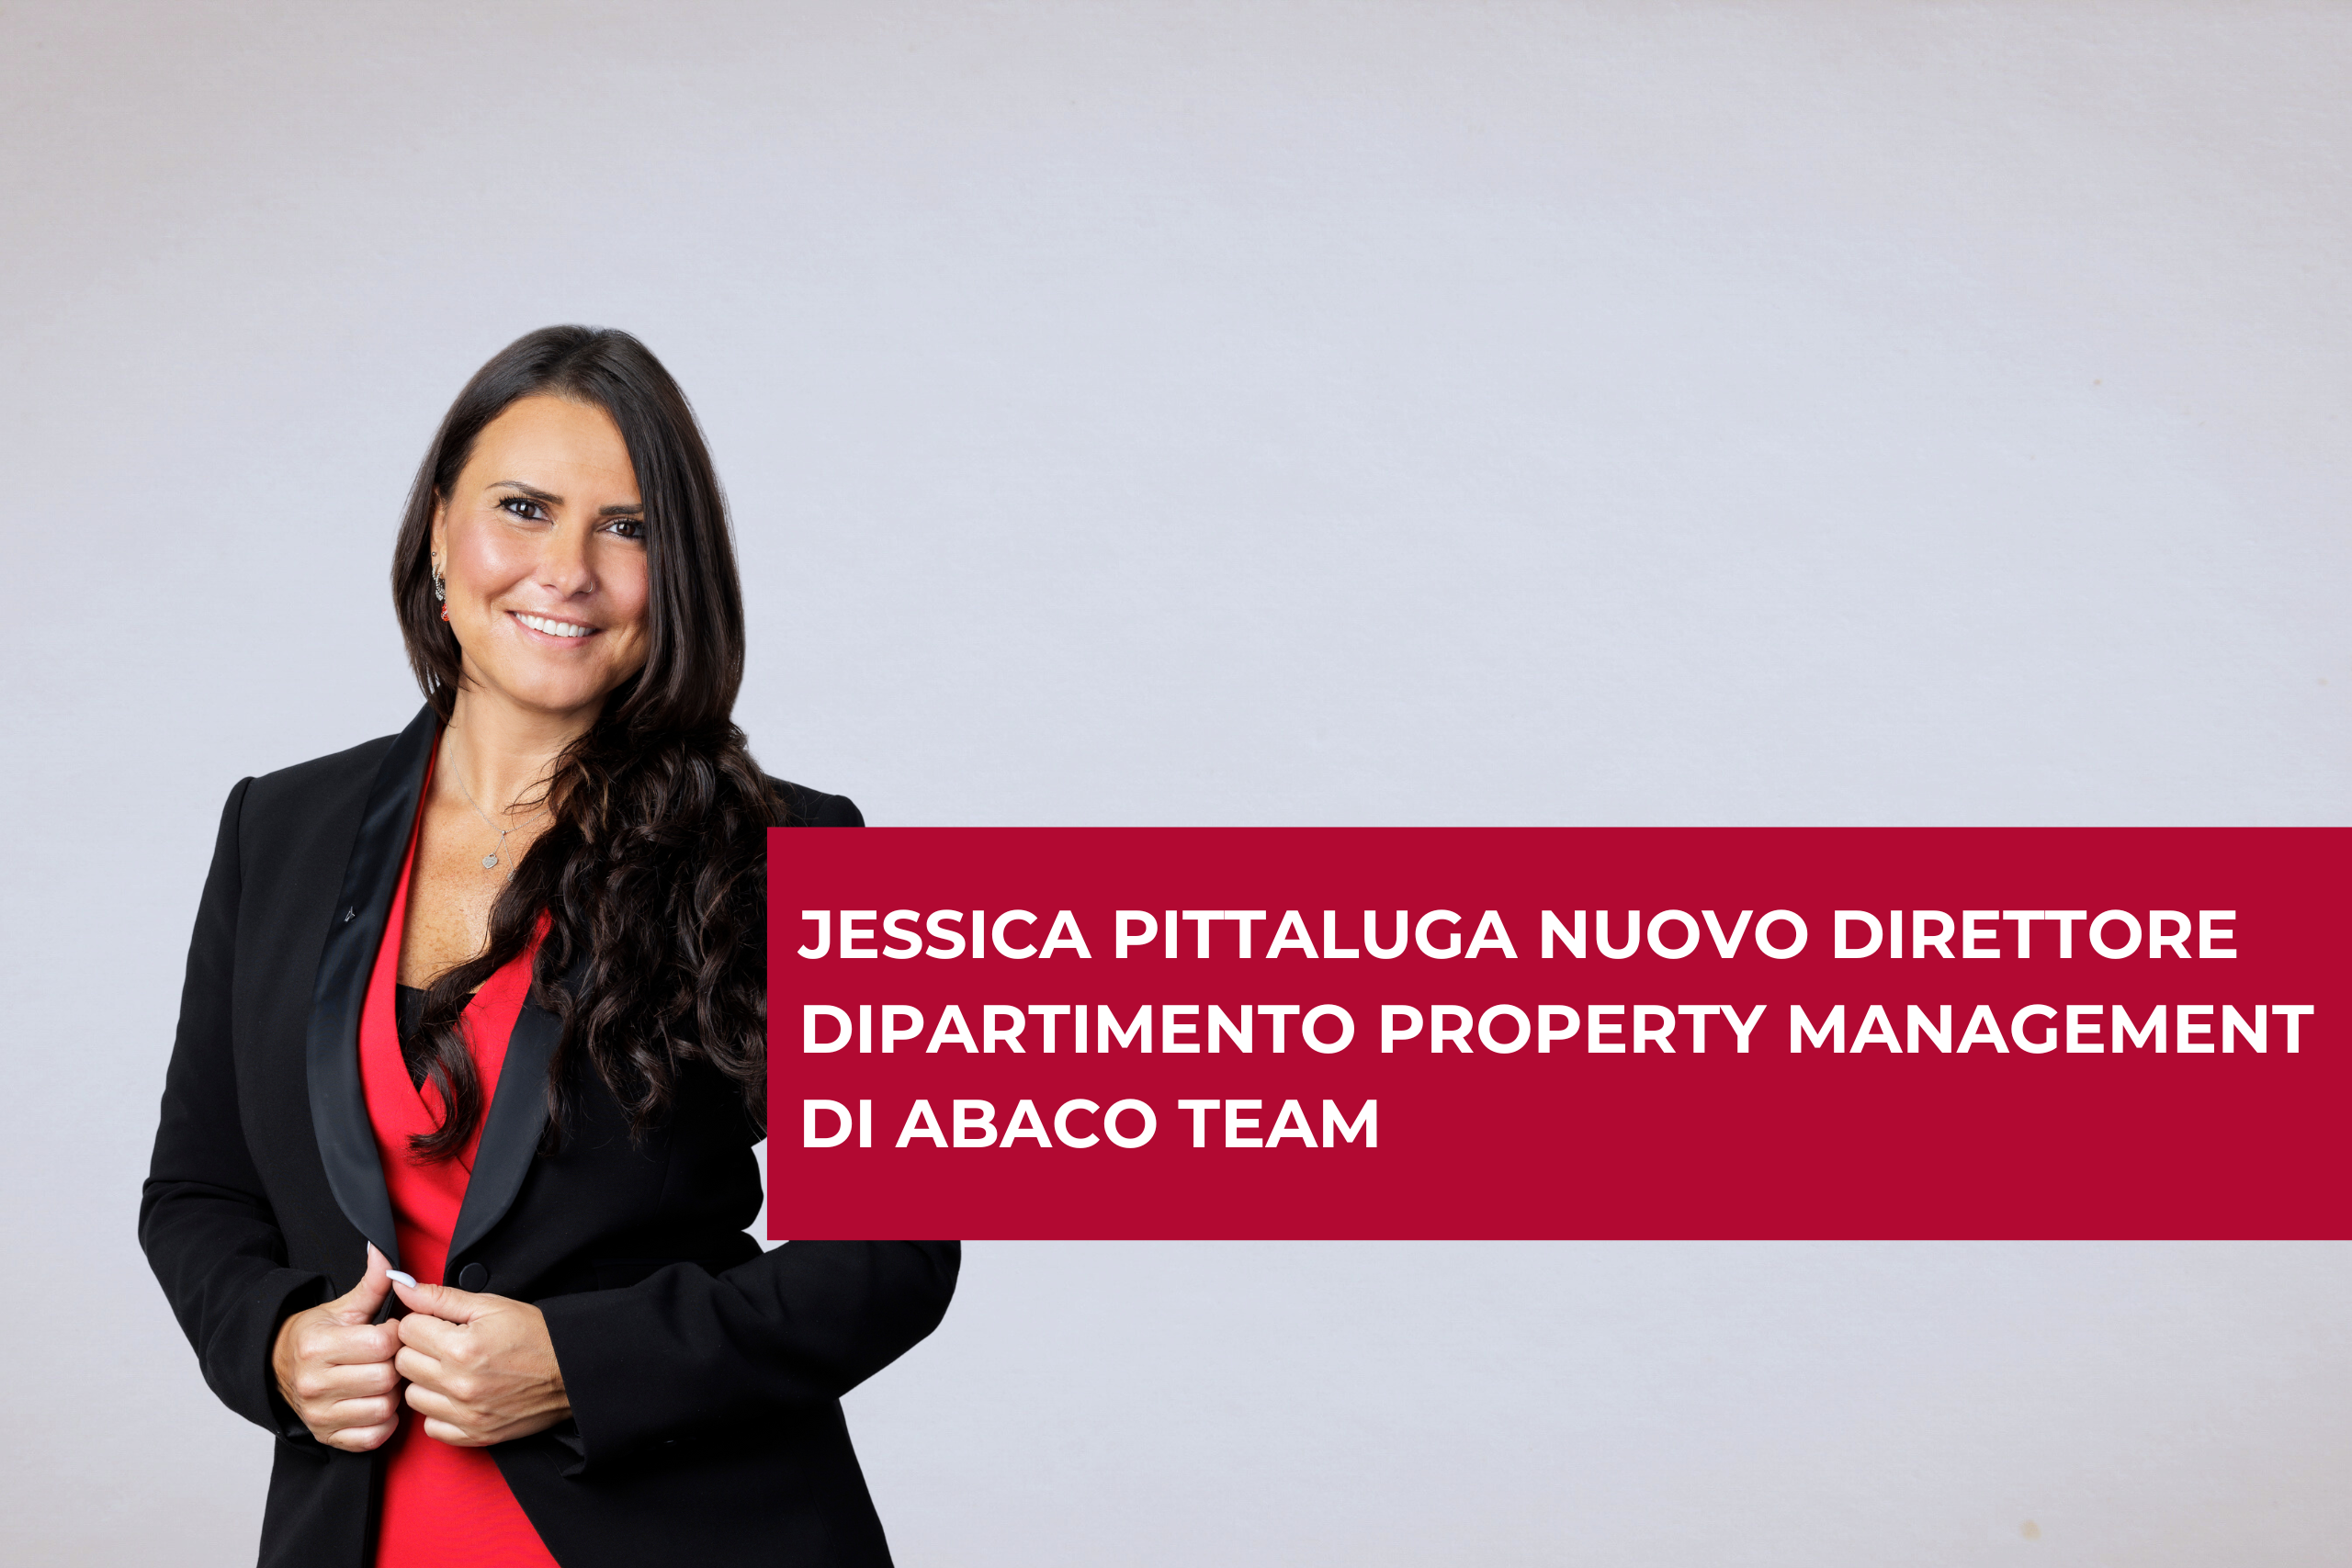 Jessica Pittaluga nuovo Direttore Dipartimento Property Management di Abaco Team